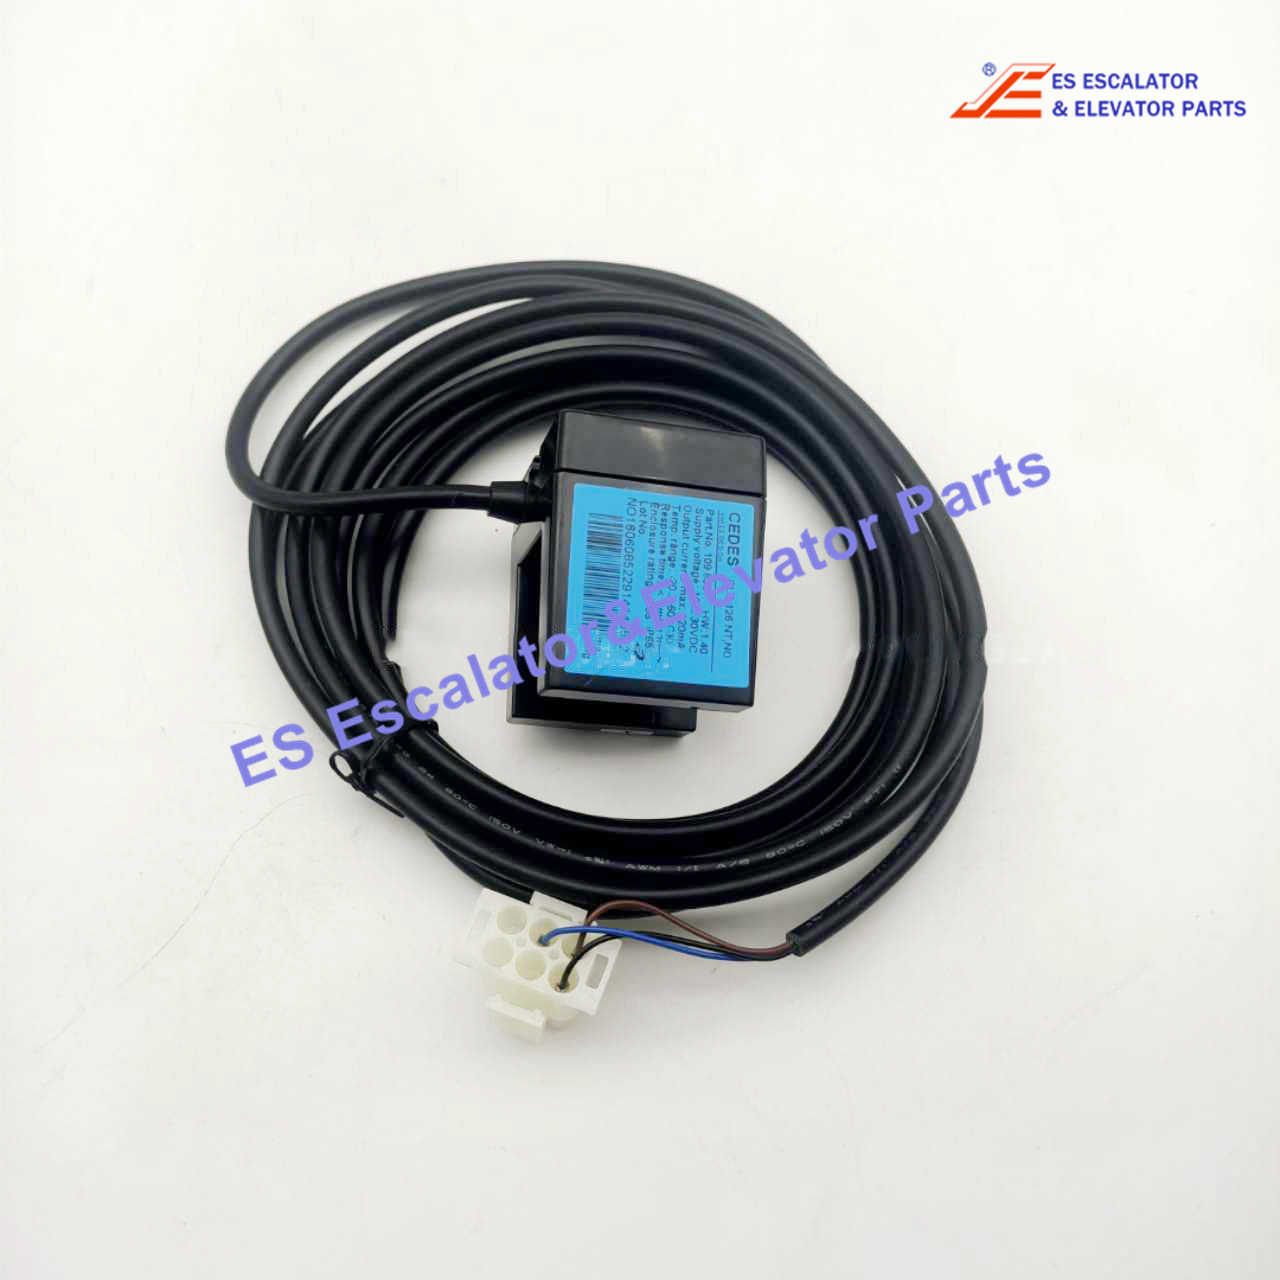 GLS 126 NT,NC/NO Elevator Sensor 109835 Voltage:10-30VDC Current Max:120mA Use For CEDES